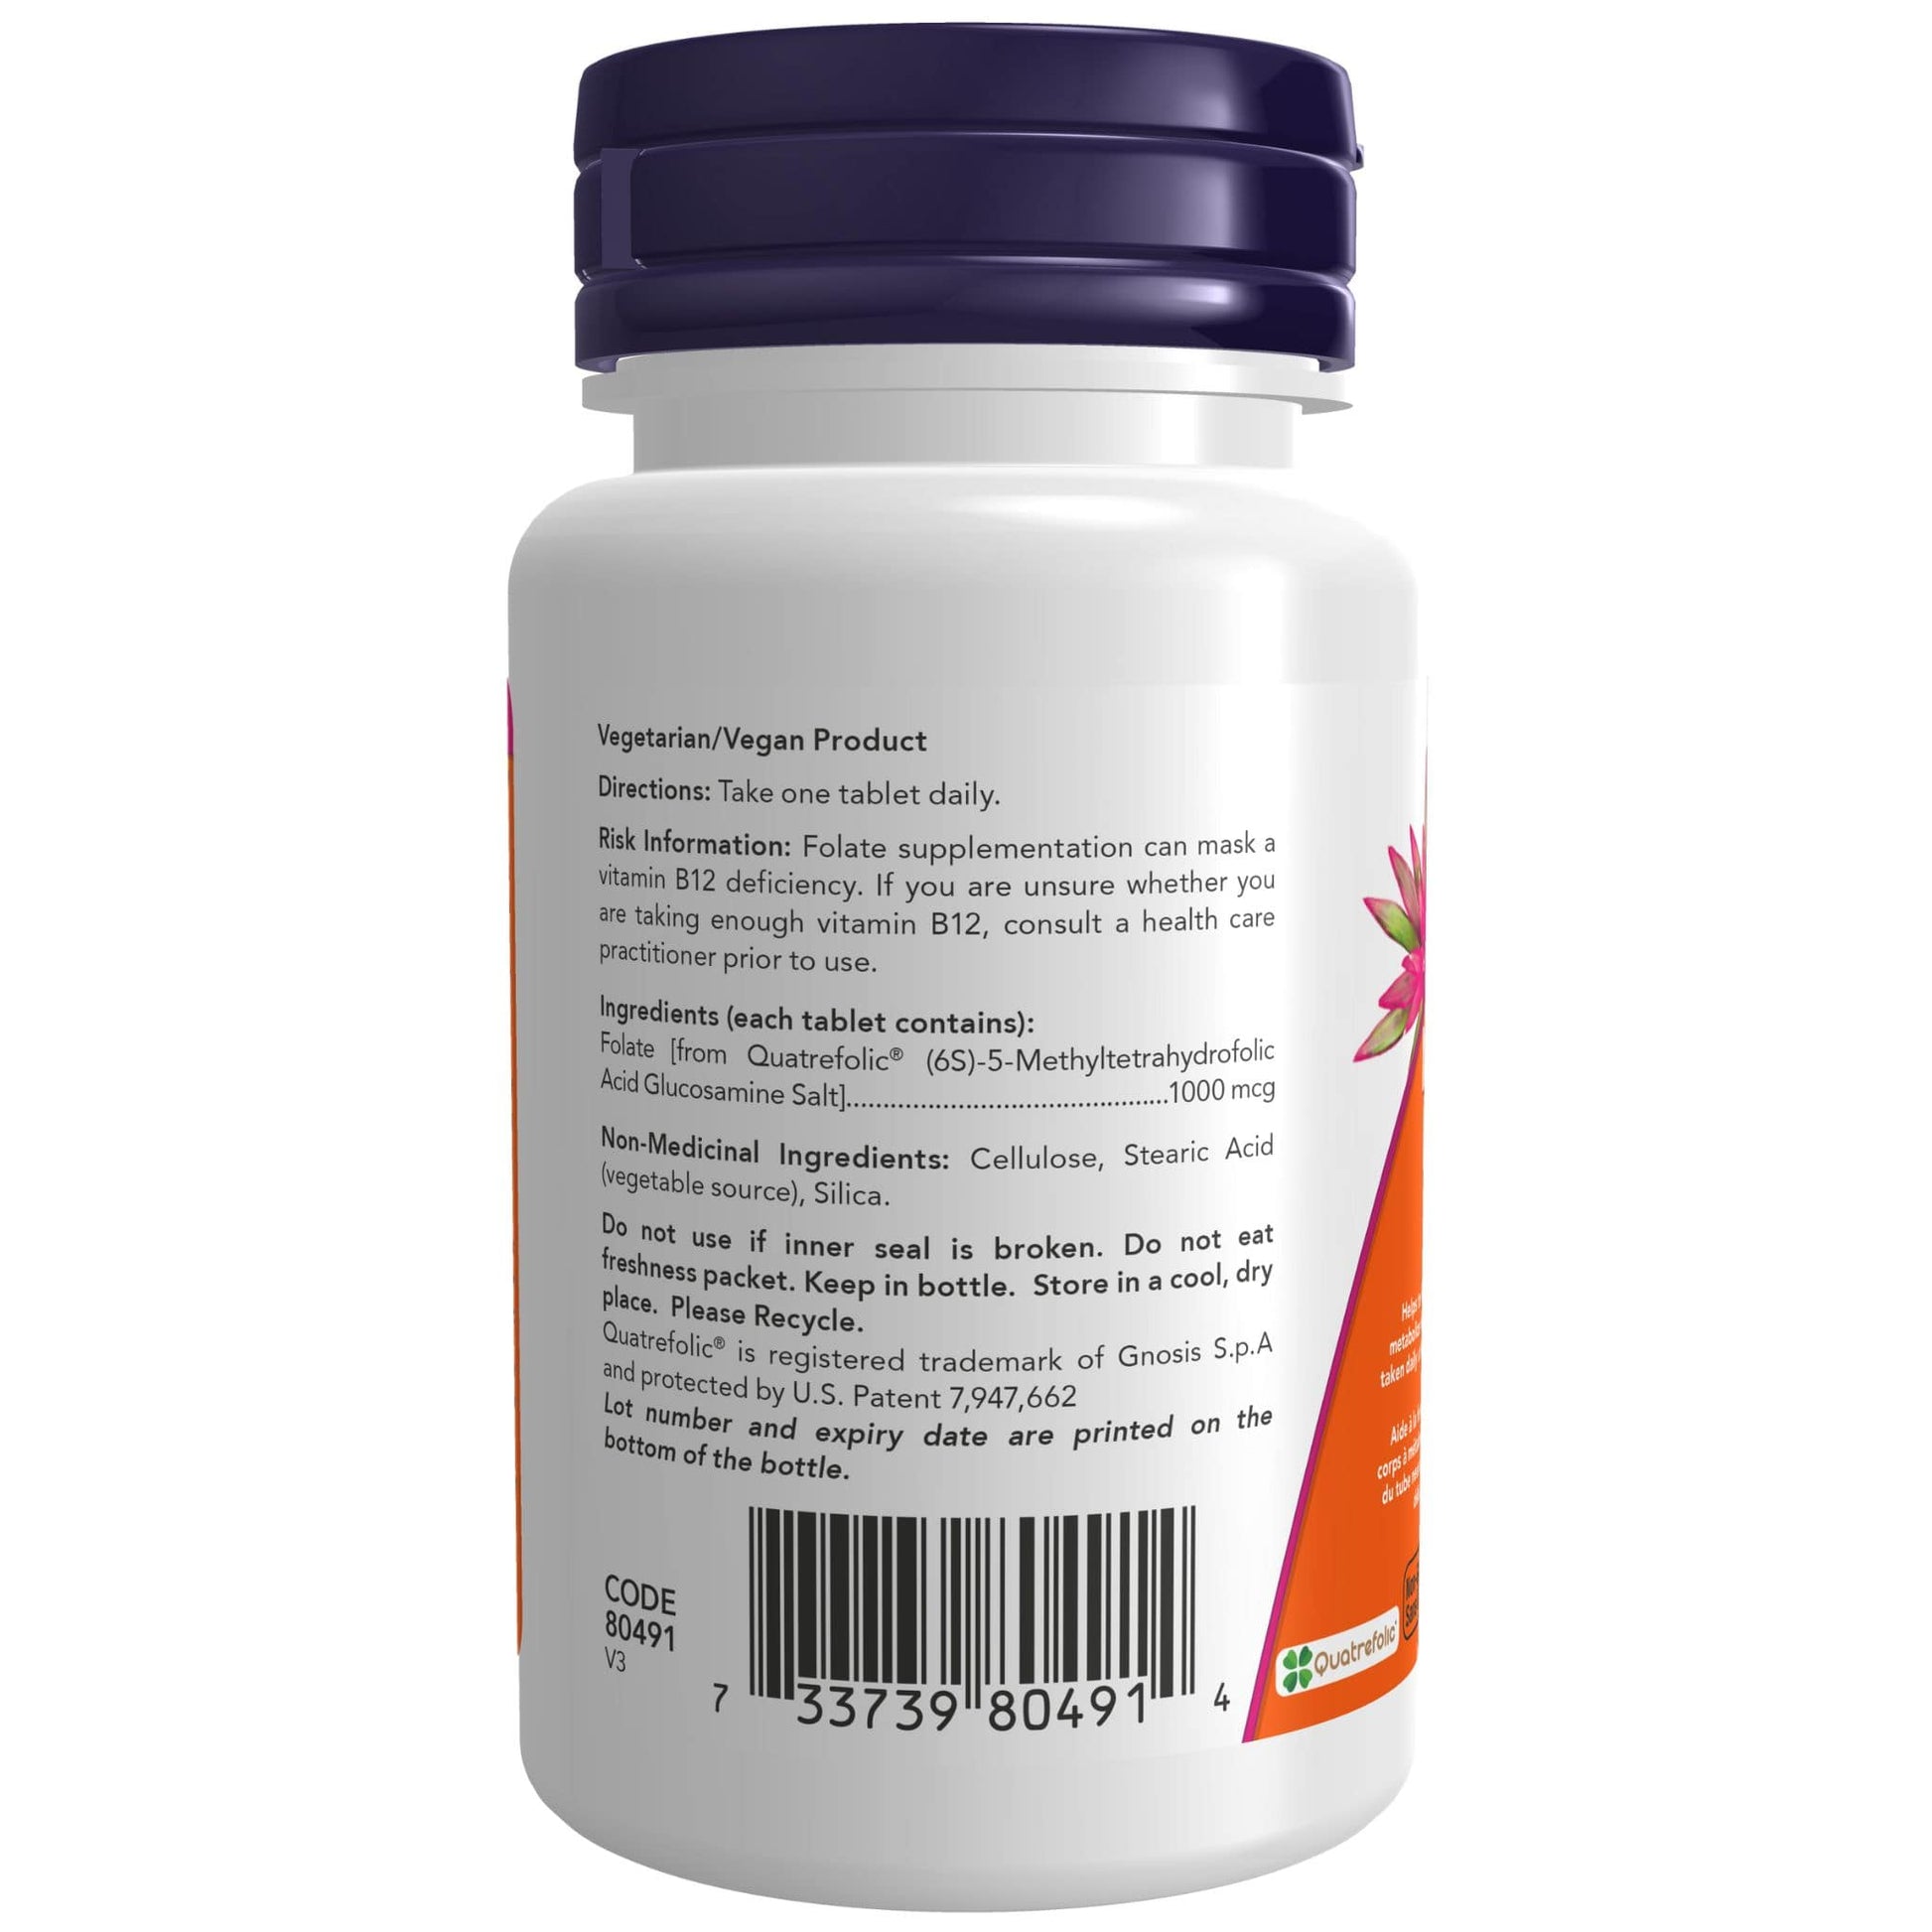 90 Tablets | Now Methyl Folate 1000mcg